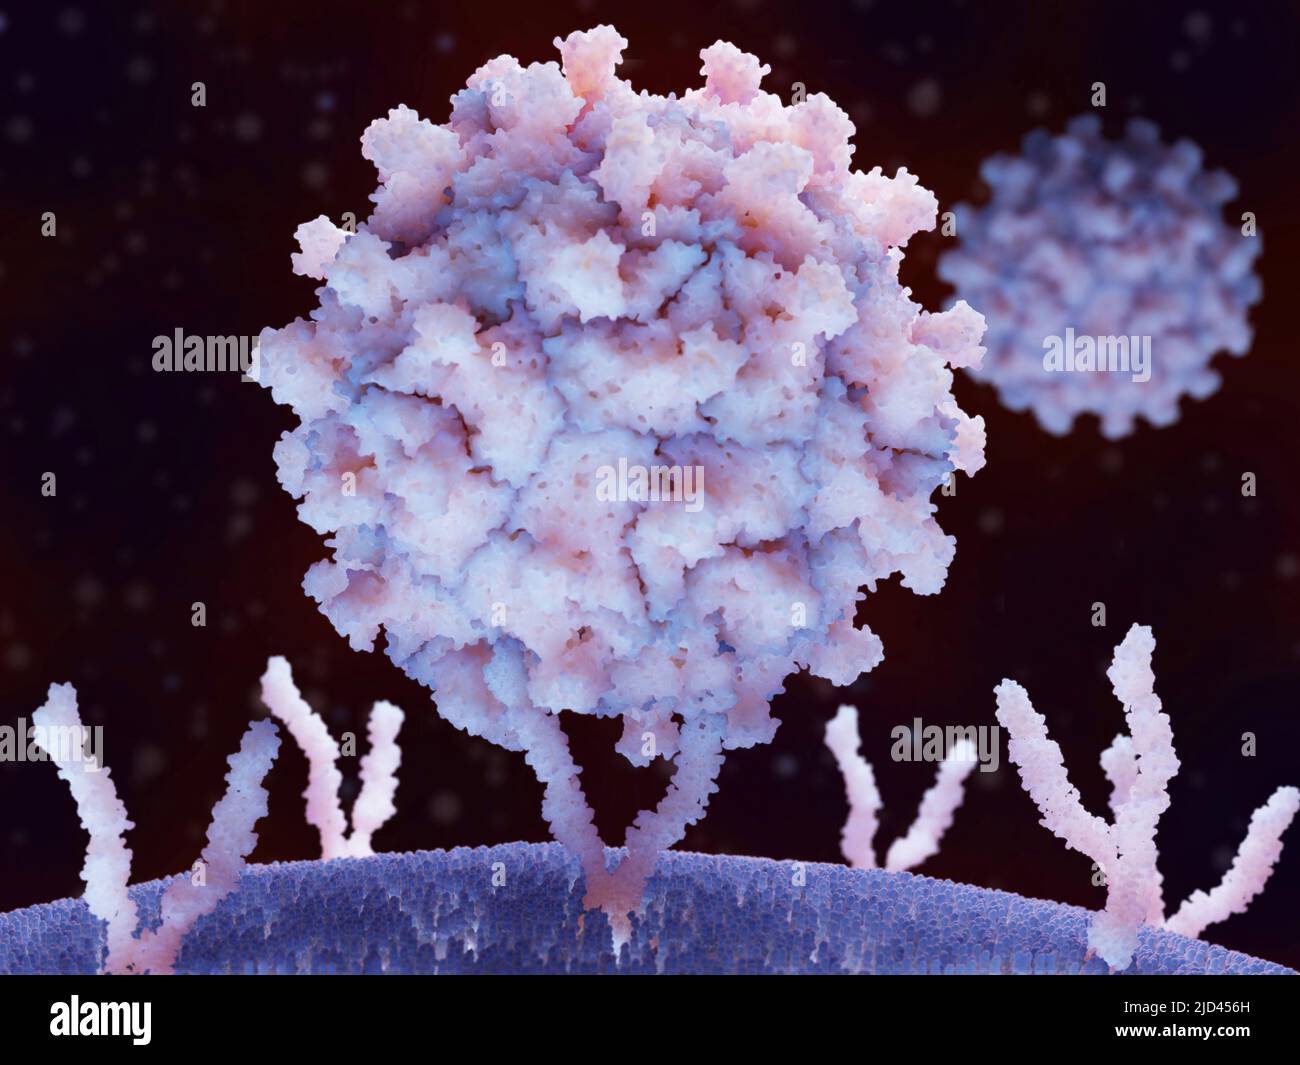 Coxsackievirus bound to human cell, illustration Stock Photo